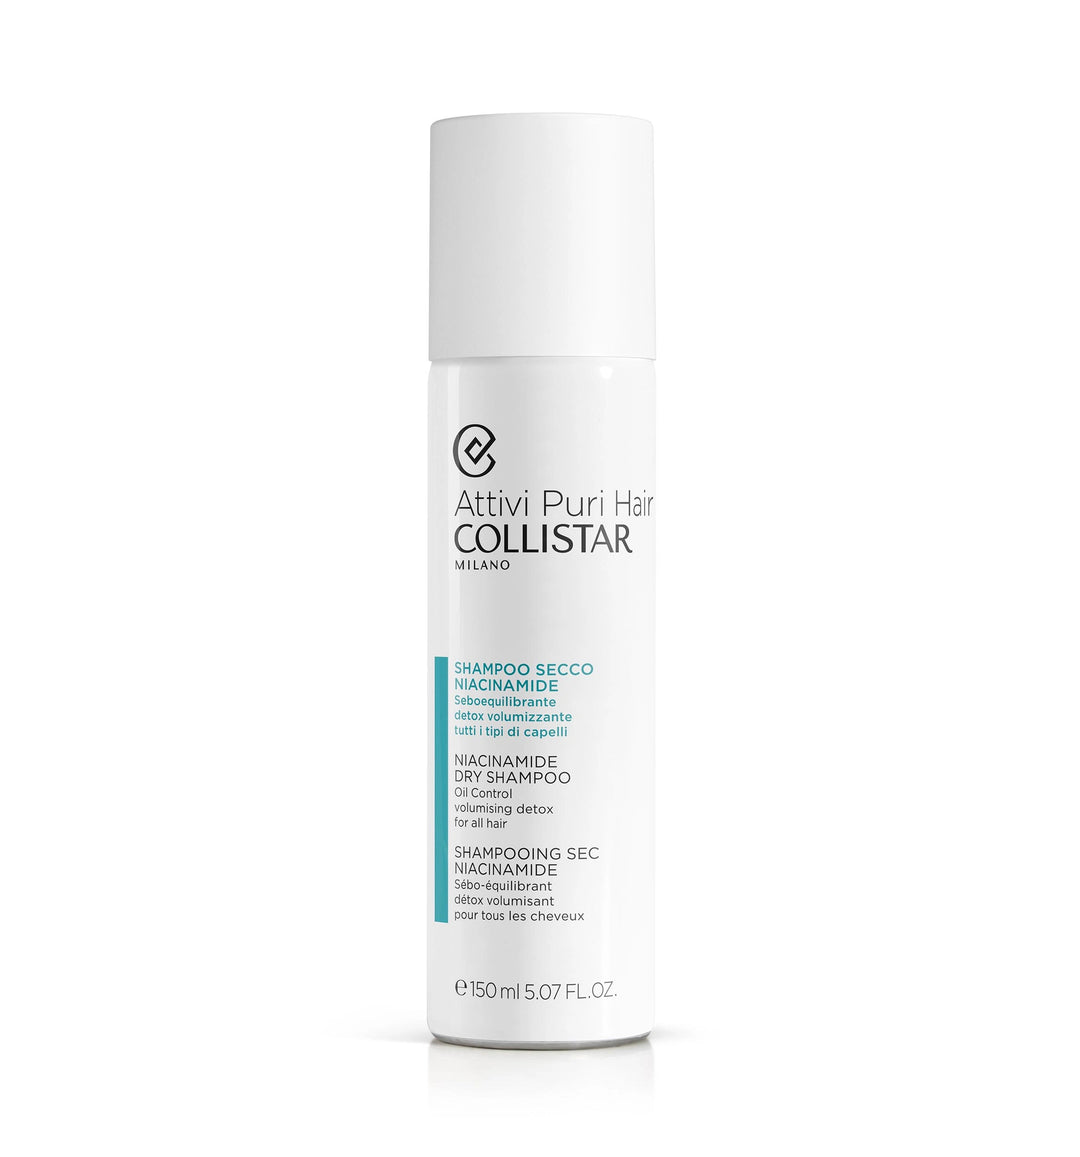 

Collistar Dry Shampoo with Niacinamide, Sebum-Balancing, Detoxifying, and Volumizing for All Hair Types 150 ml